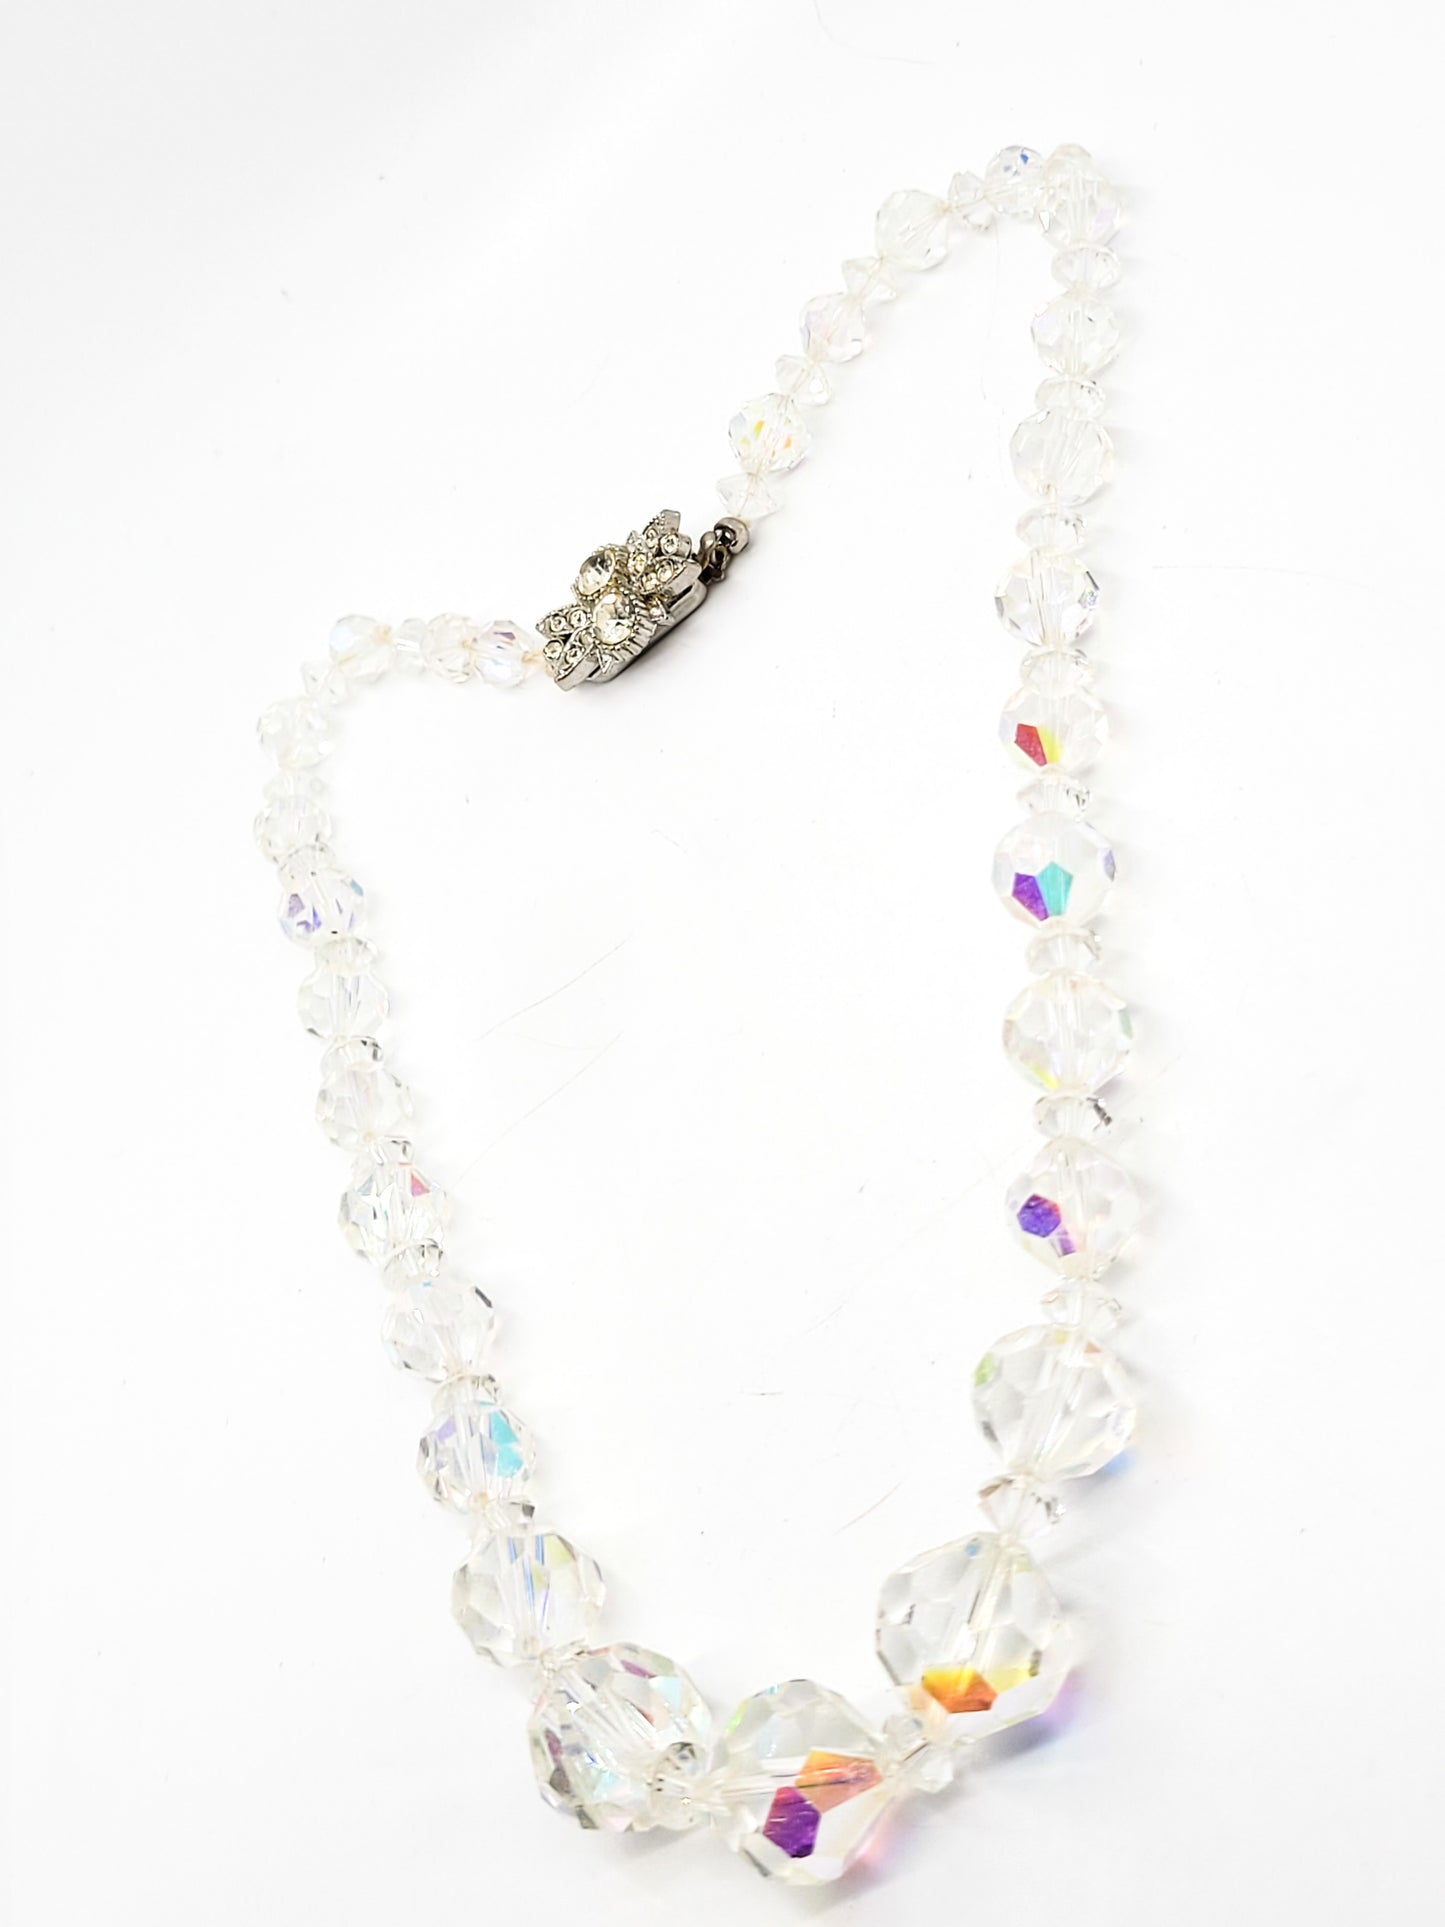 Austrian Crystal graduated AB vintage necklace with rhinestone box clasp